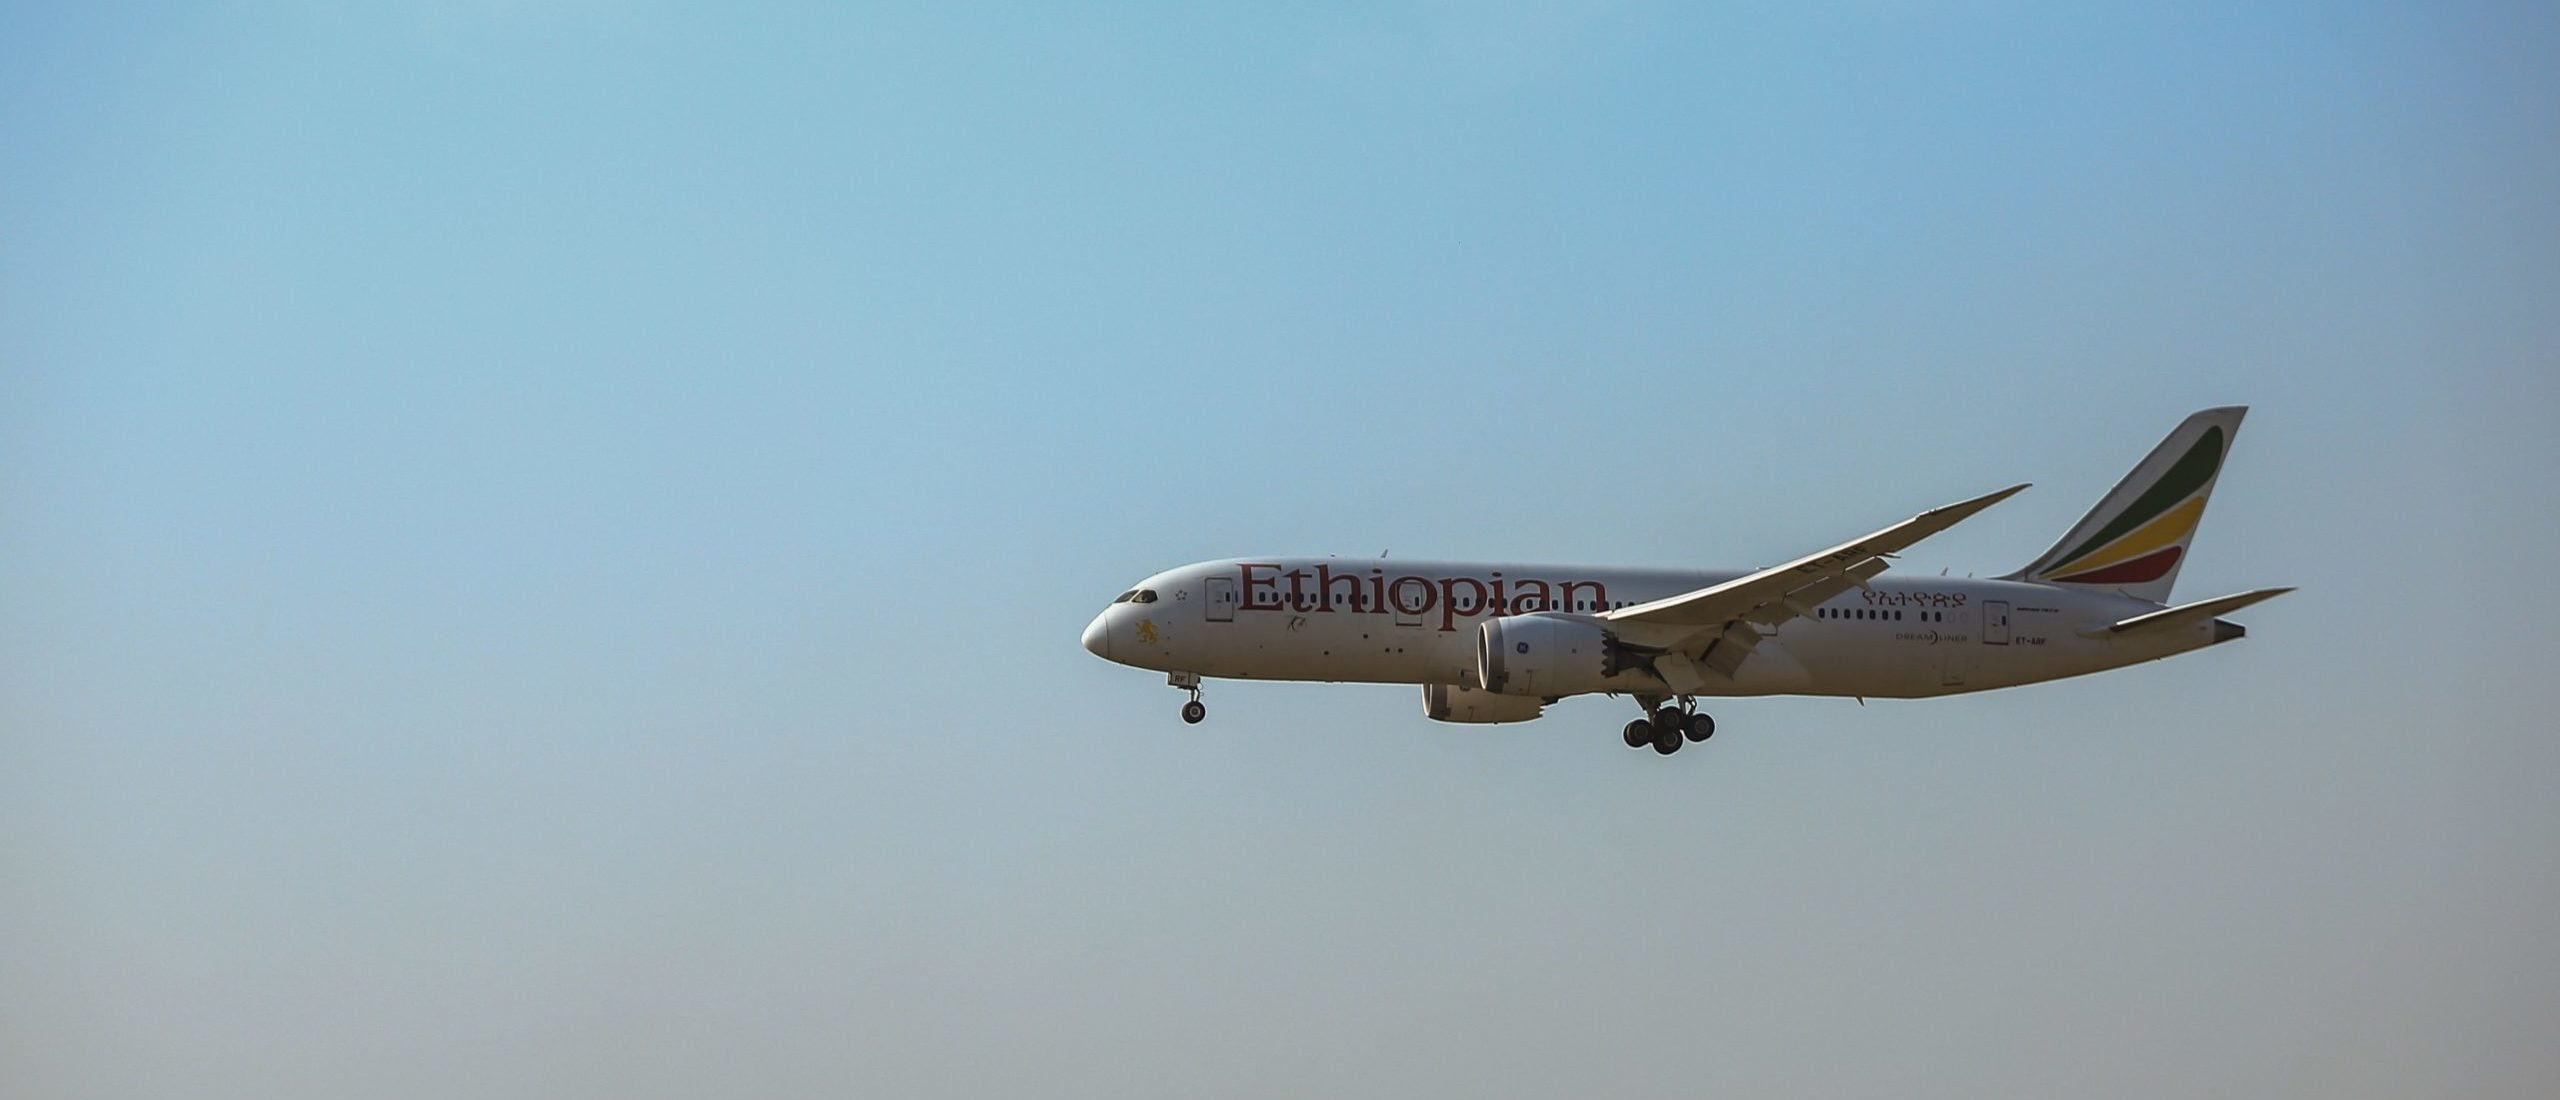 Ethiopian Government Air Strike Forces UN Plane To Abort Landing